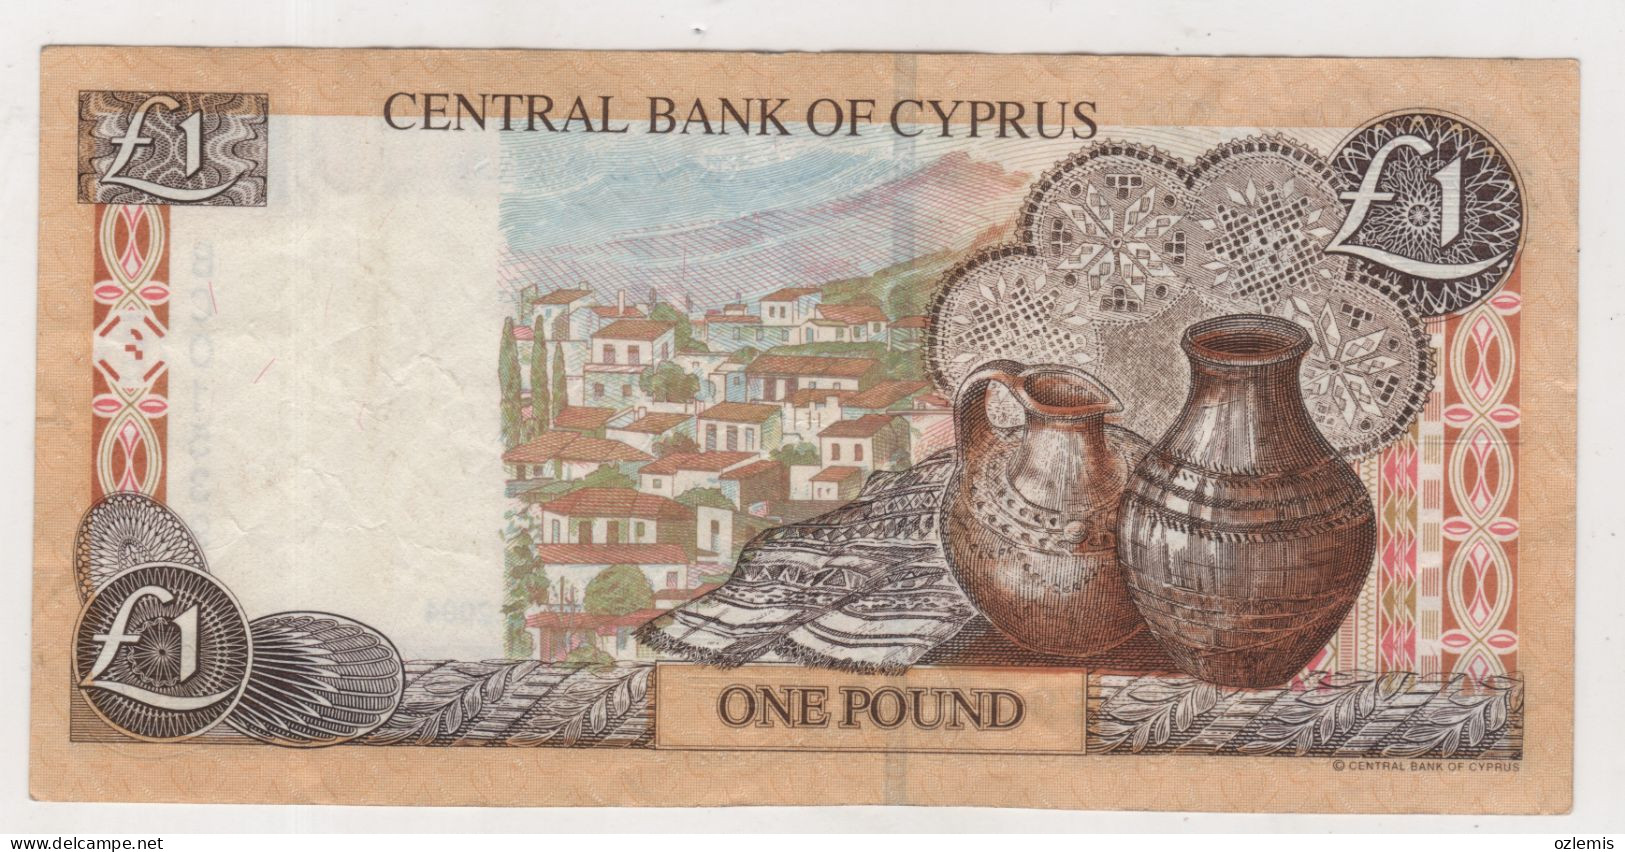 CYPRUS,CHYPRE ,ONE POUND,VF ,USED - Cyprus